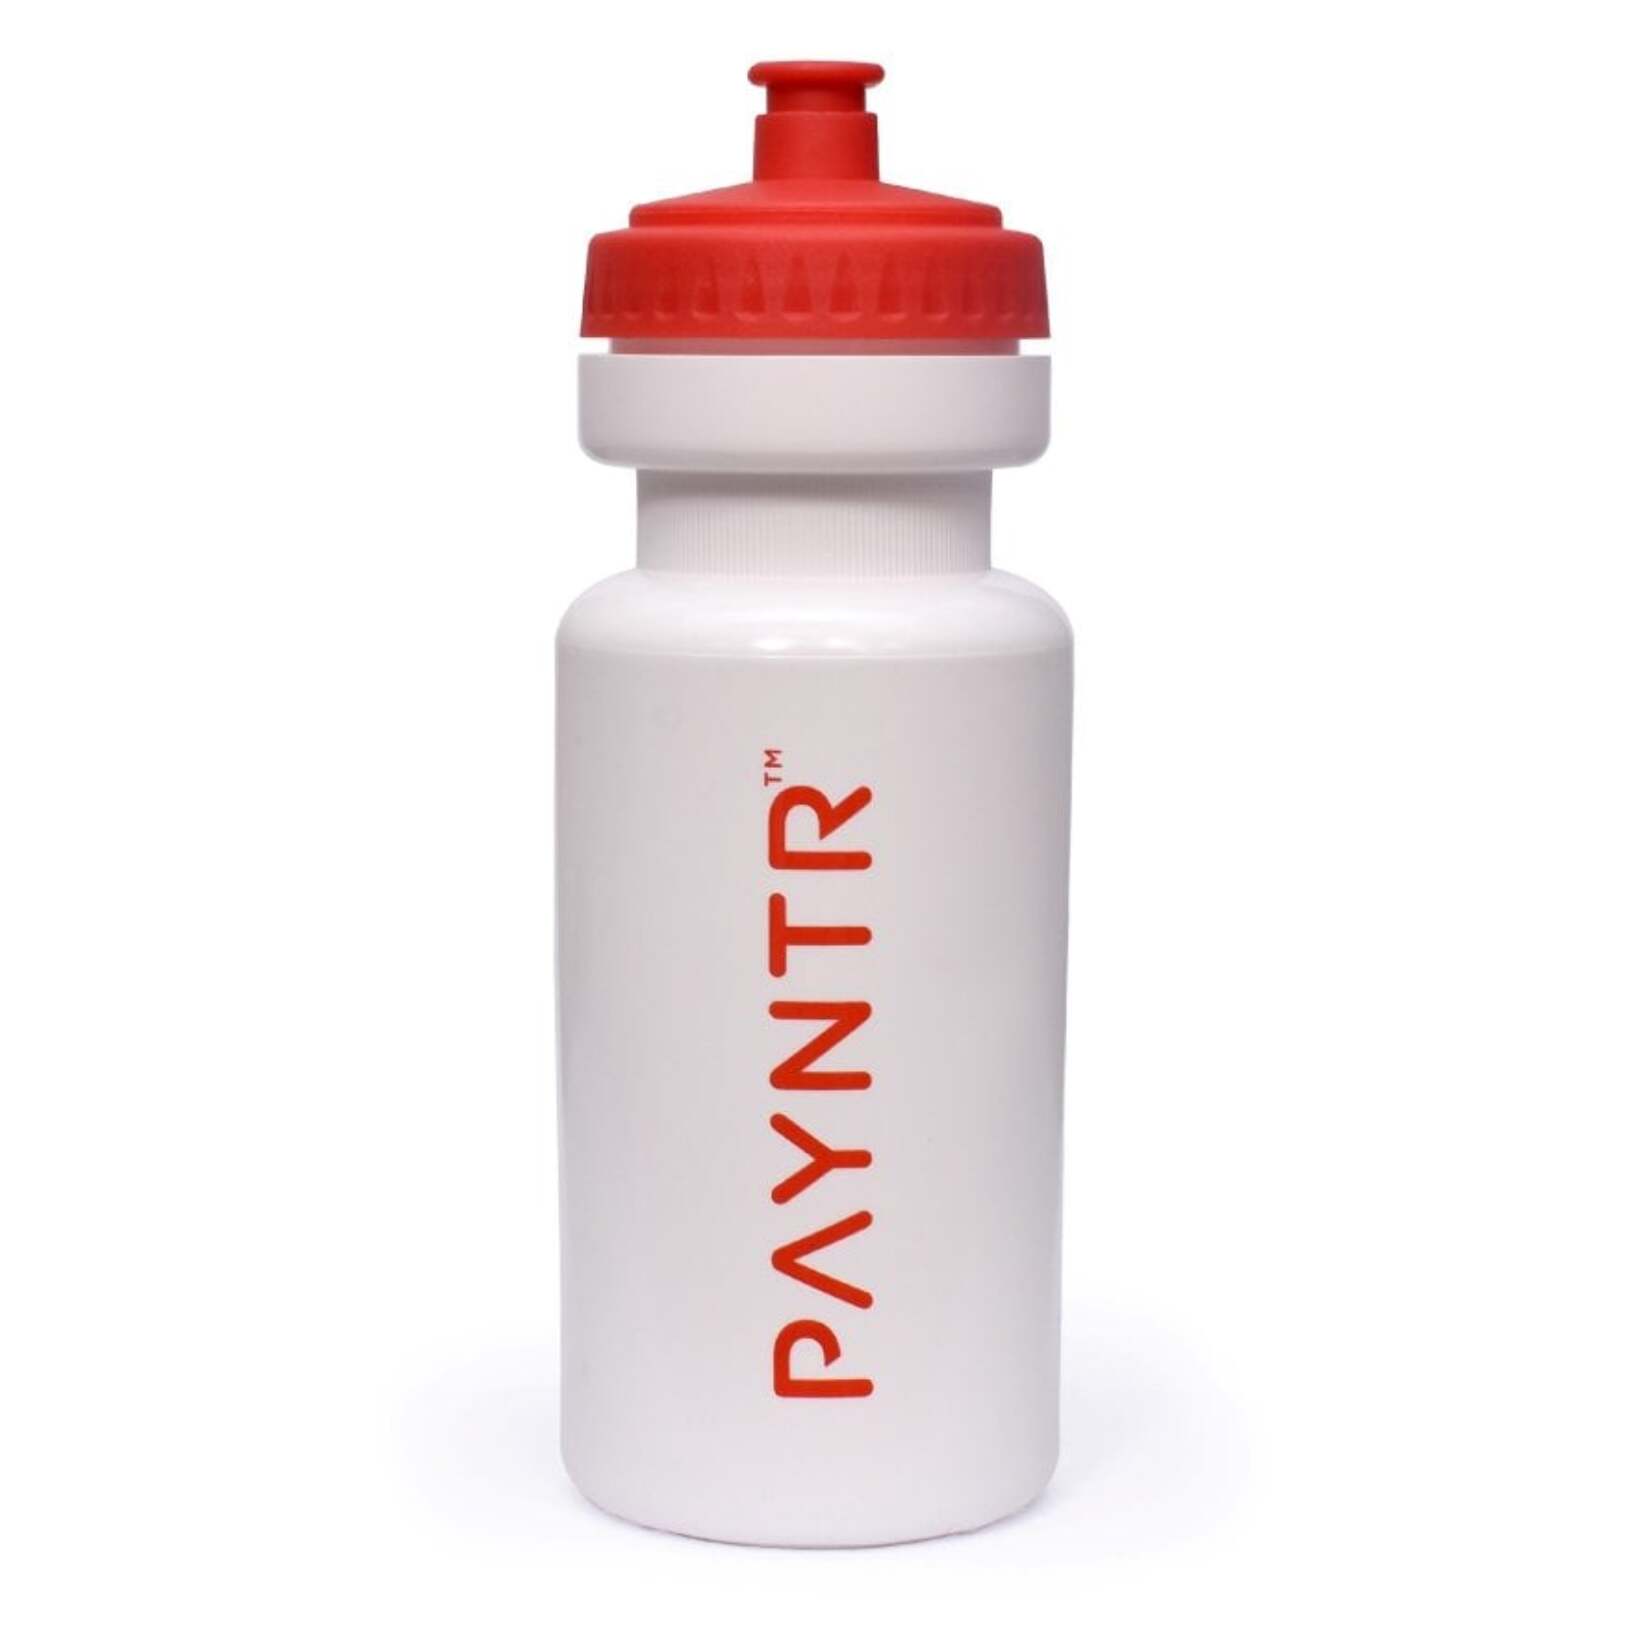 PAYNTR Sports Water Bottle White